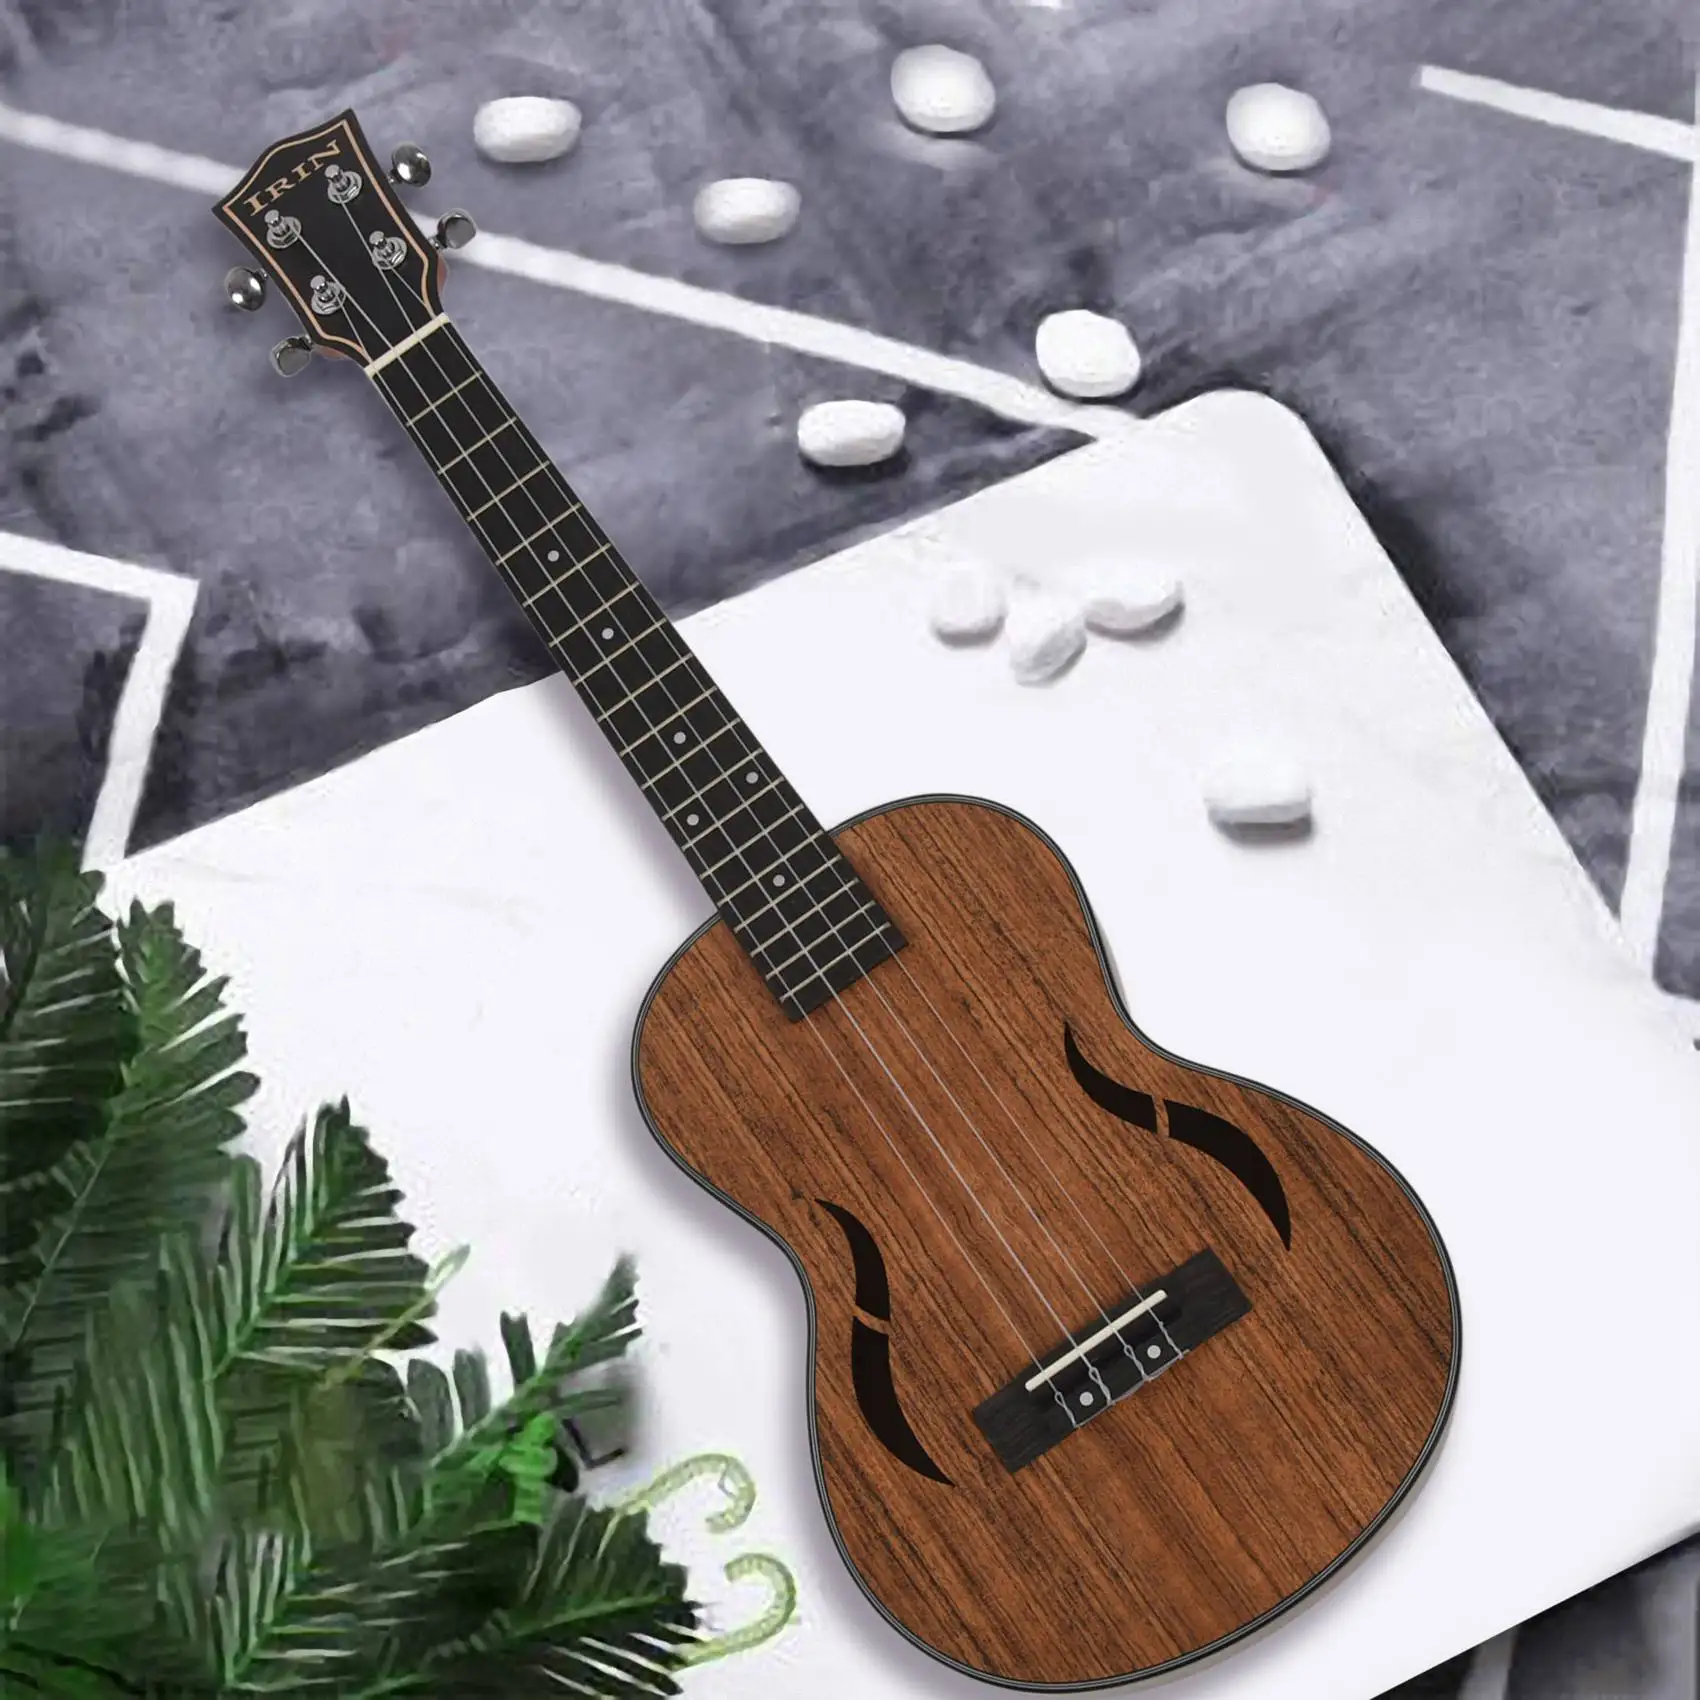 

Irin Tenor Ukulele 26 Inch Walnut Wood 18 Fret Acoustic Guitar Ukelele Mahogany Fingerboard Neck Hawaii 4 String Guitarra